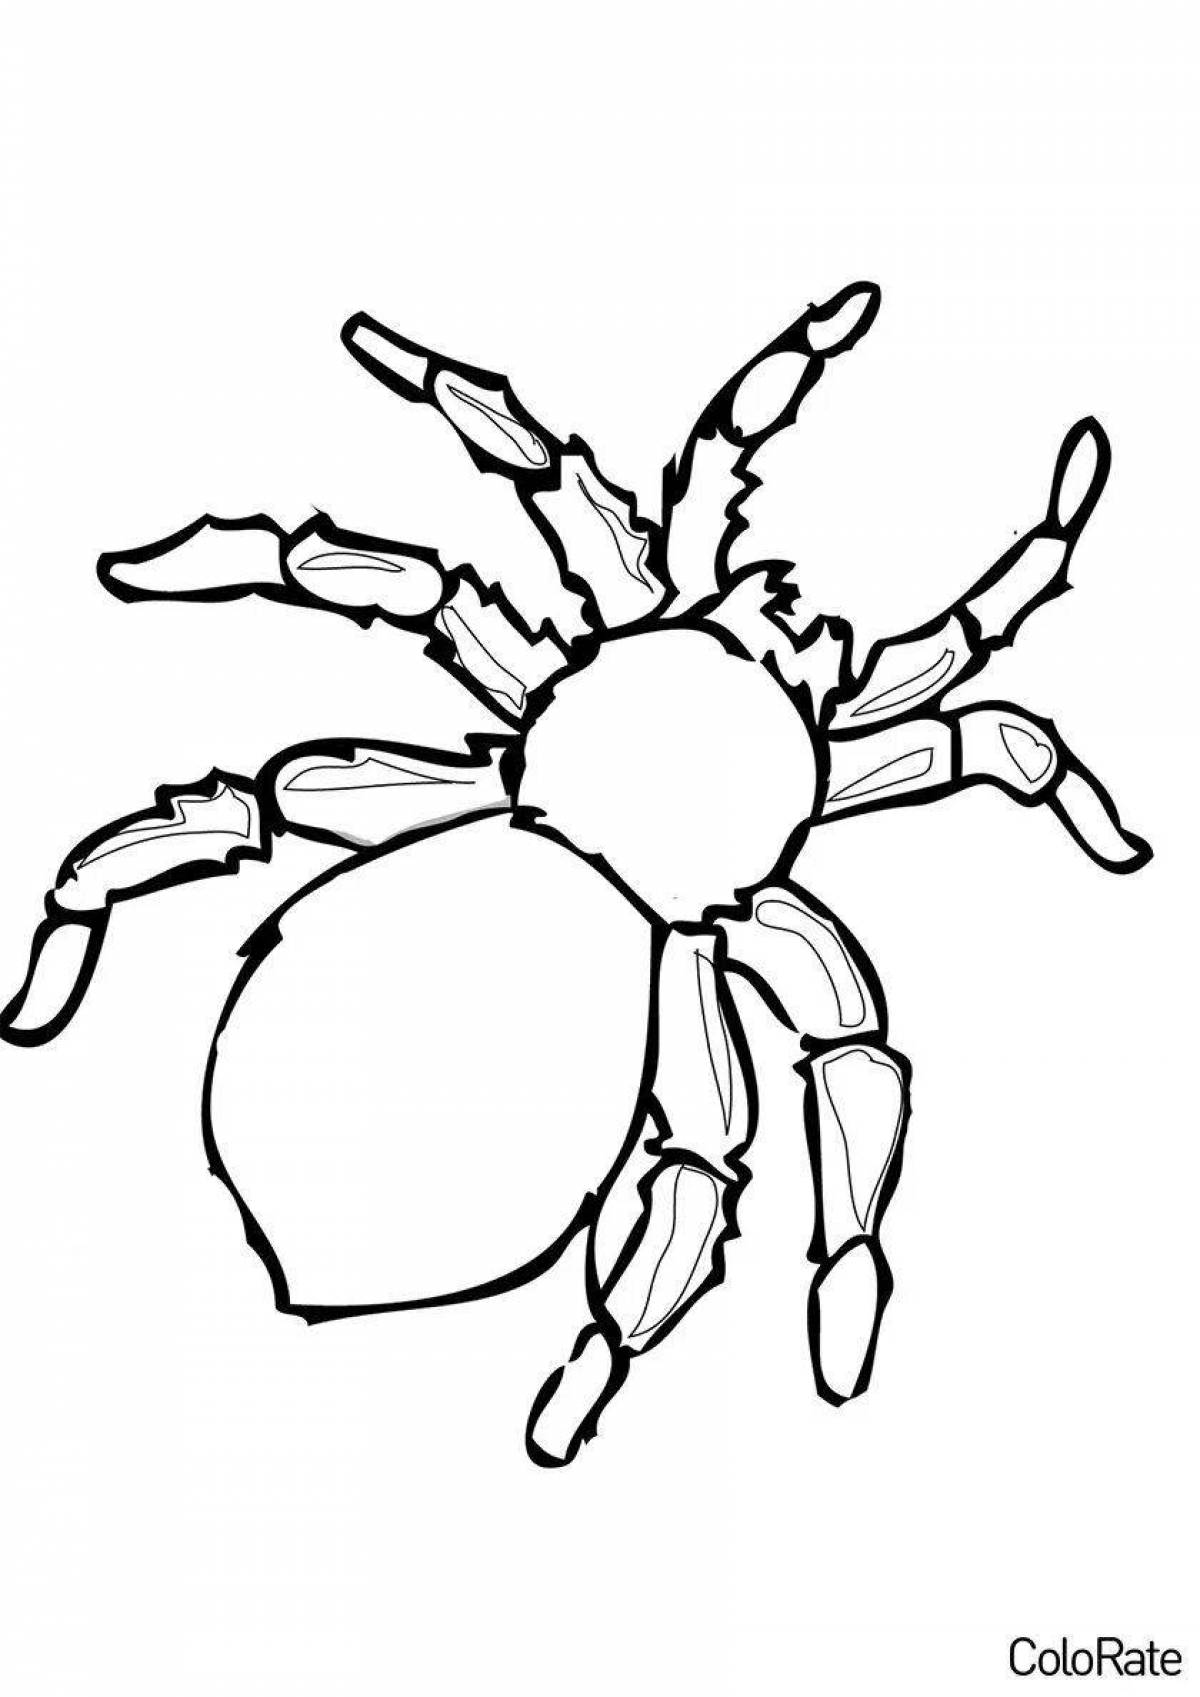 Coloring page magnificent spider tarantula